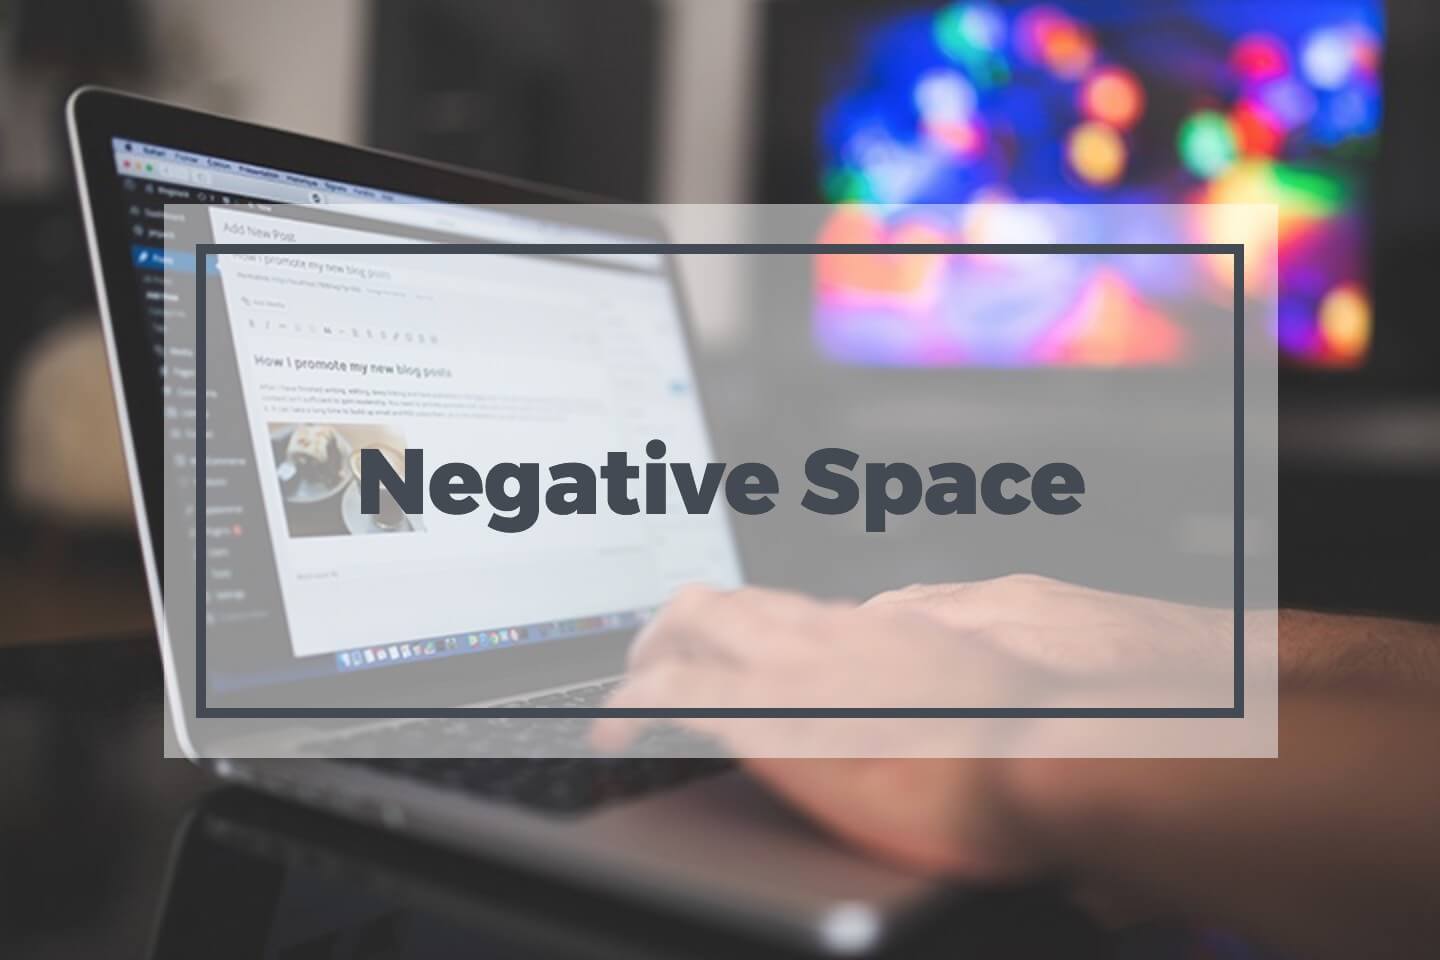 Negative Space free stock photos